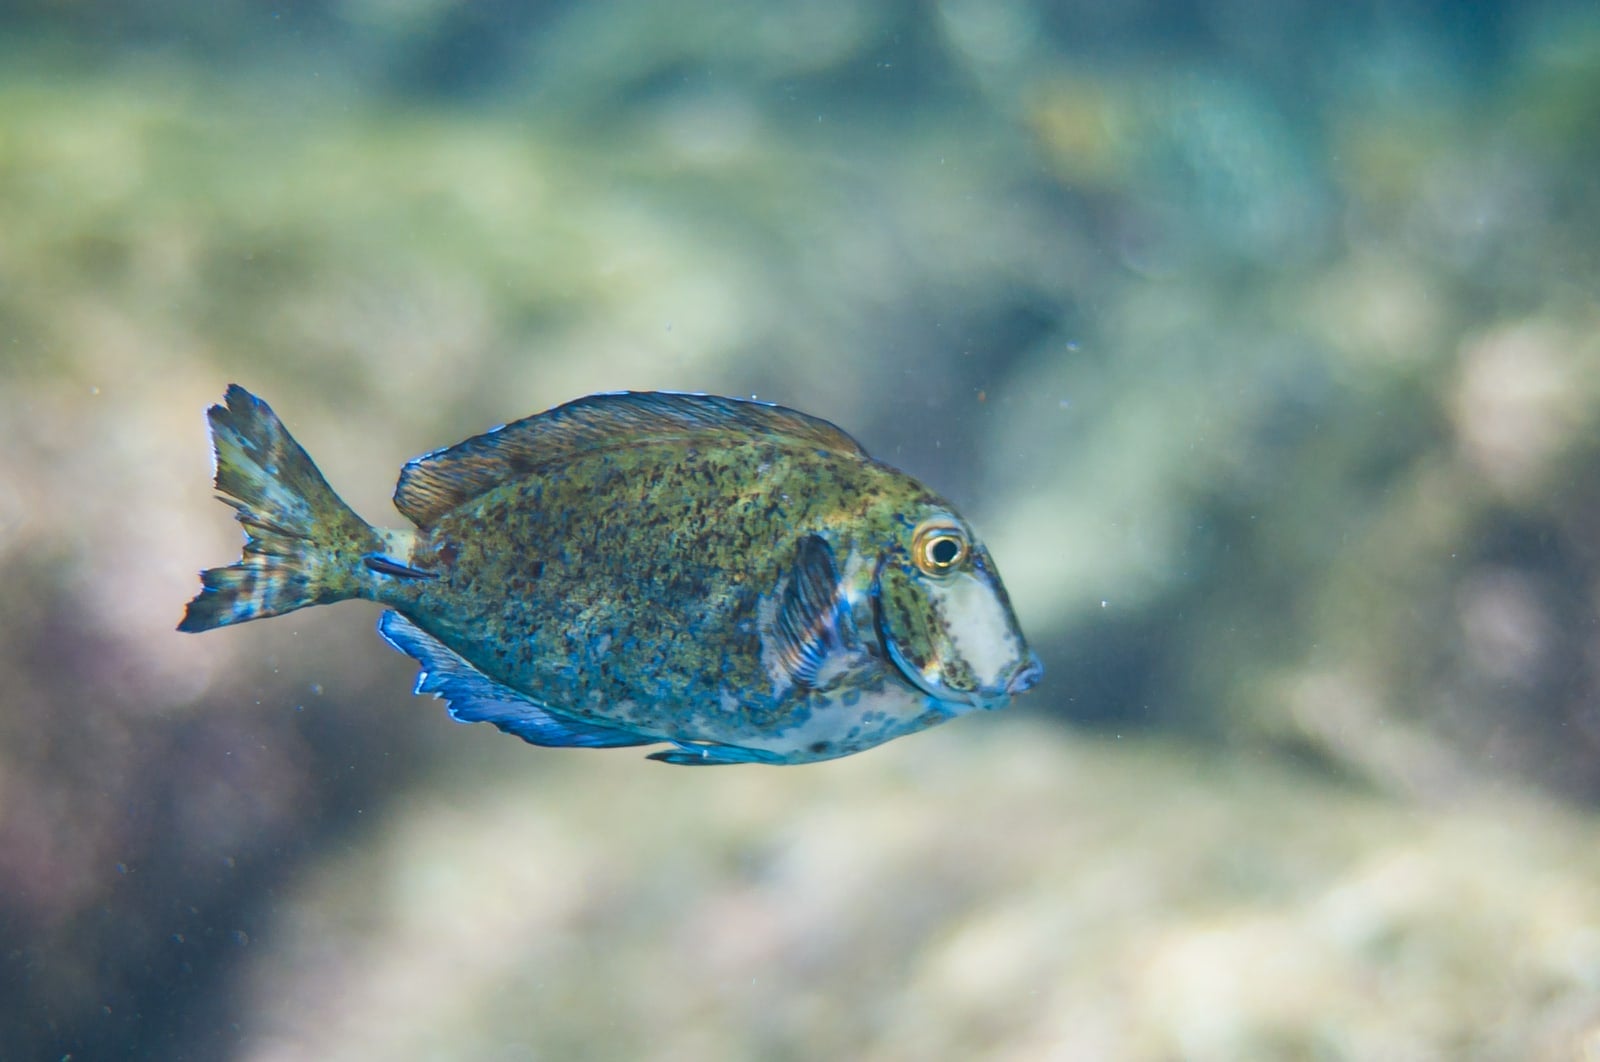 Doctorfish tang (Acanthurus chirurgus) in the Caribbean Sea